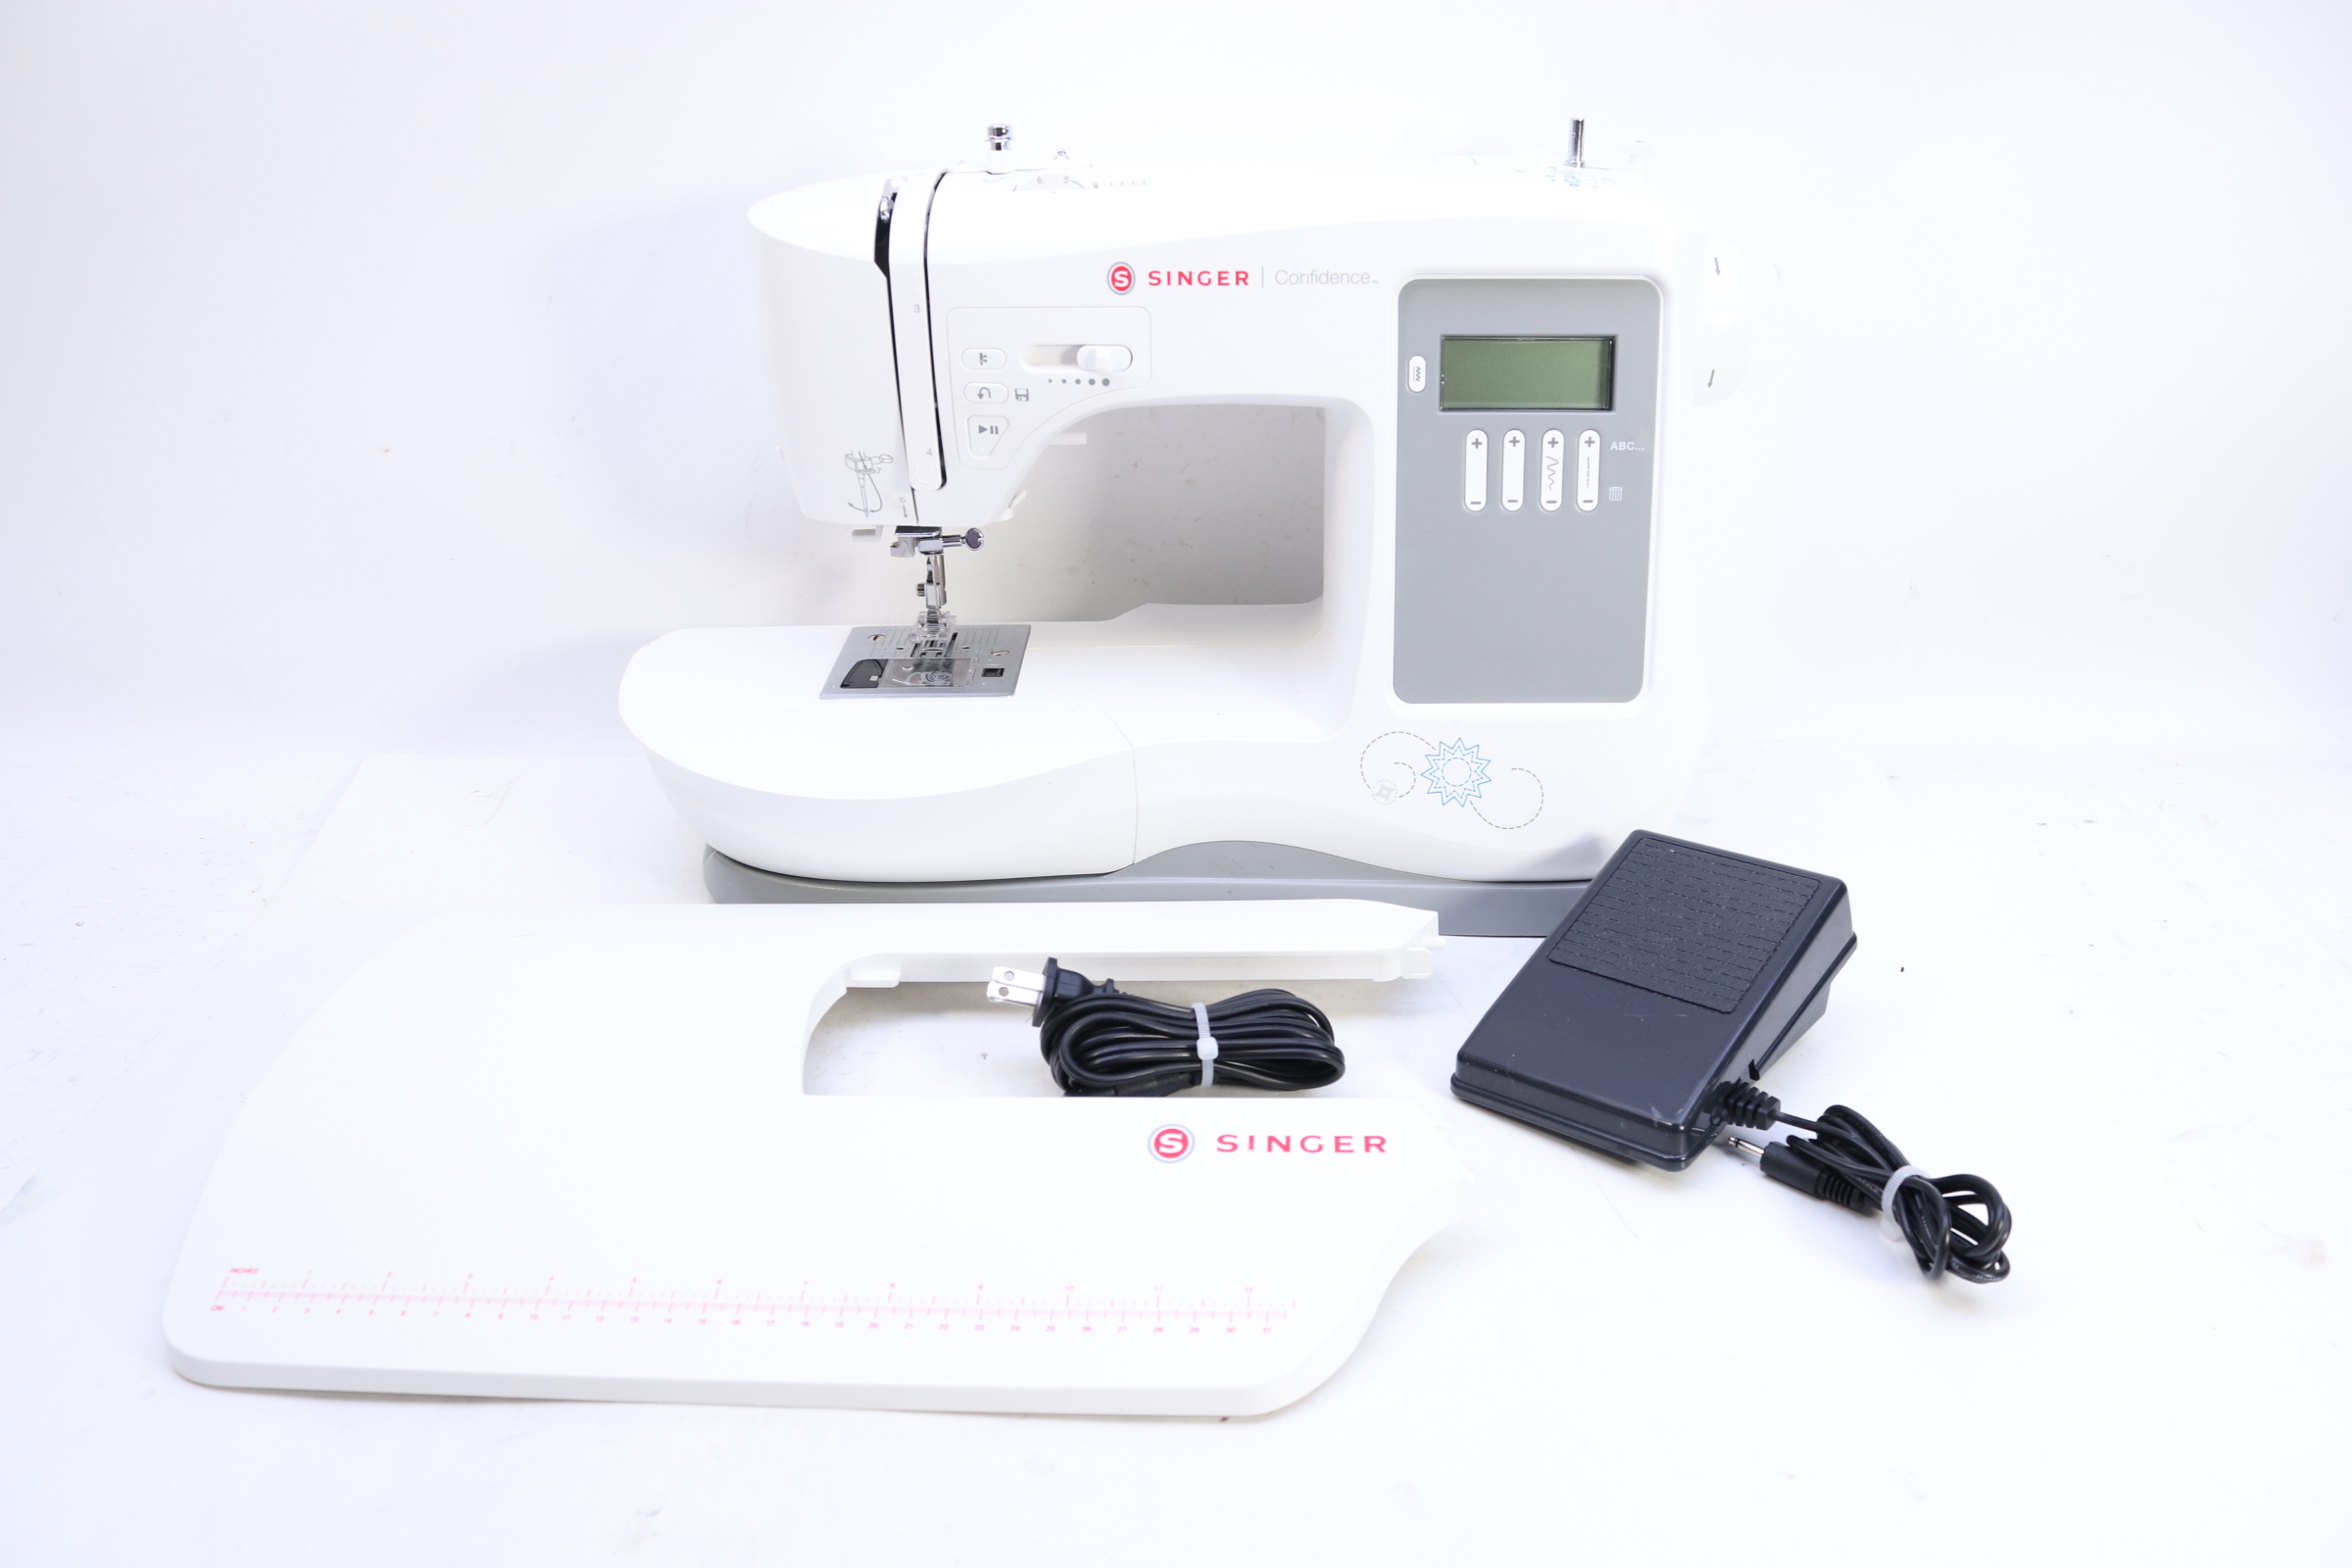 Singer Simple 2263 Sewing Machine - White / Light Blue